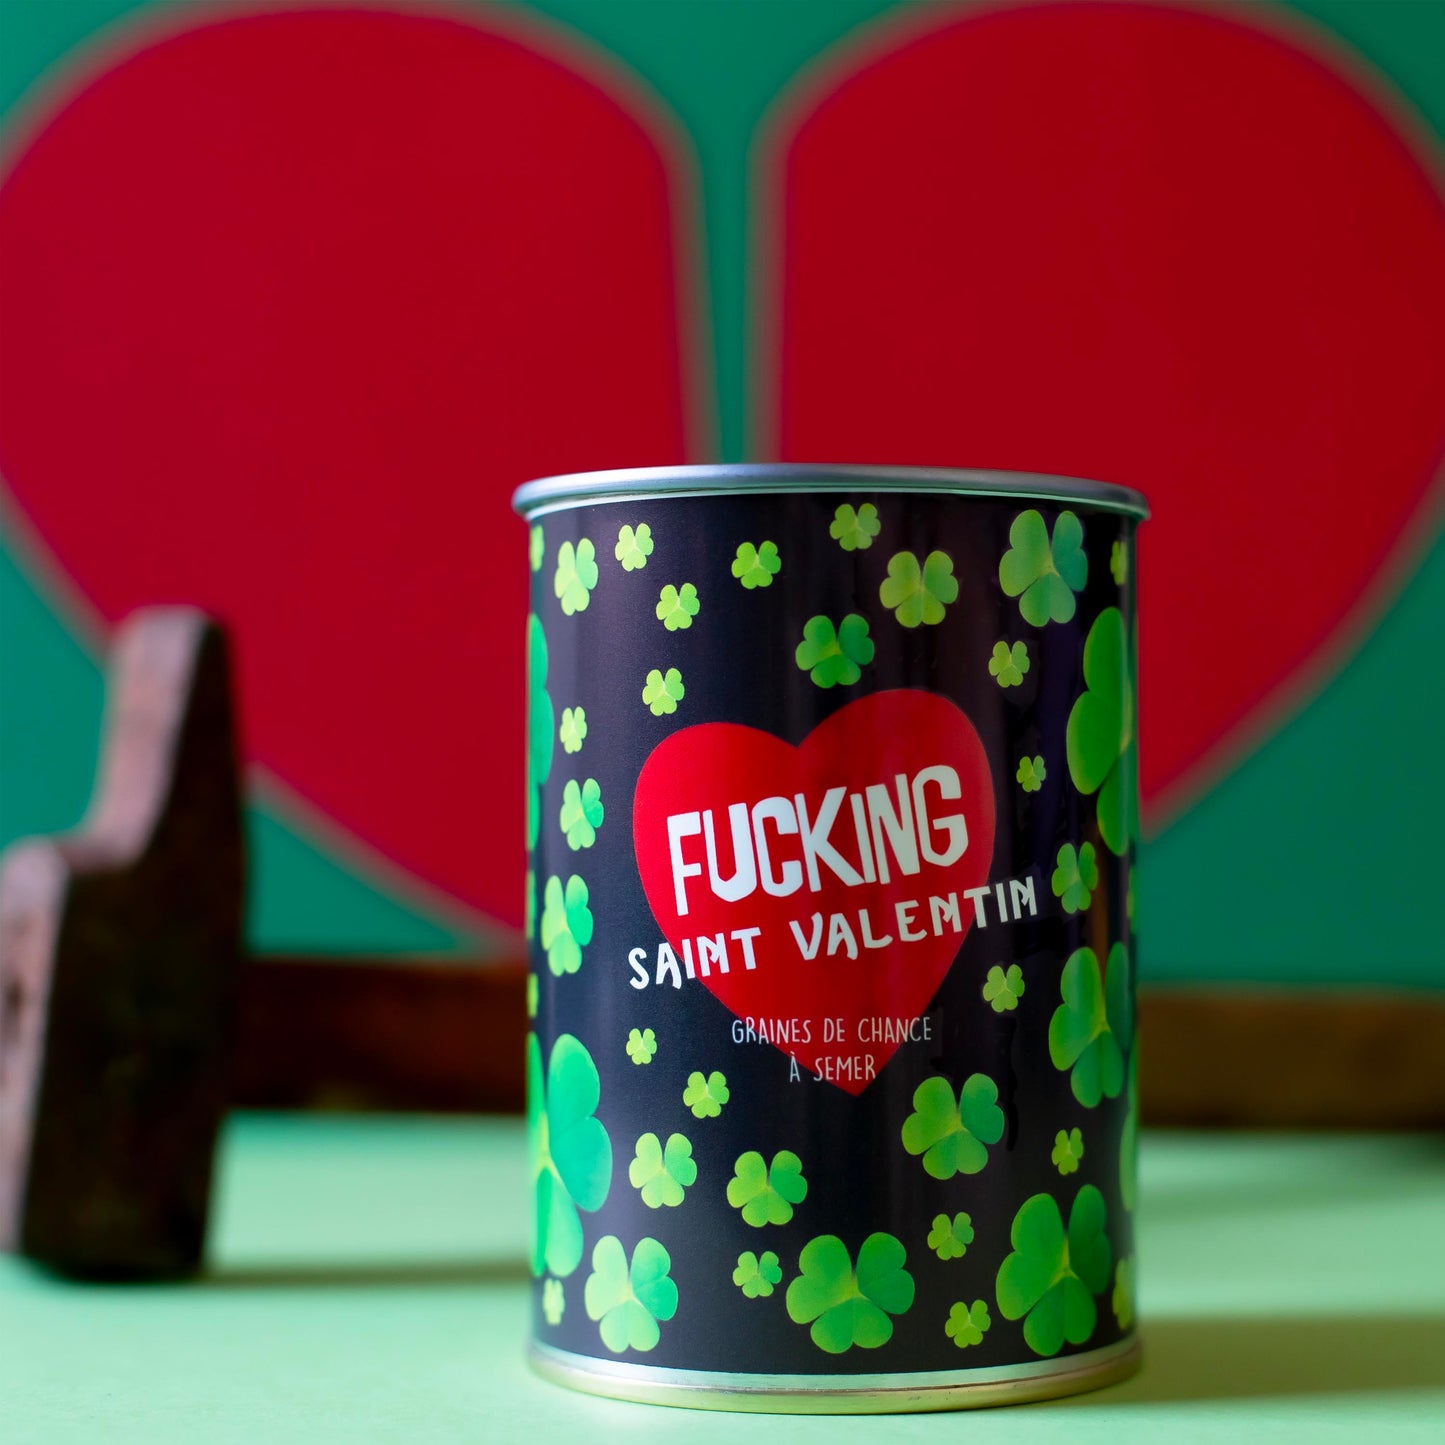 Kit à semer "Fucking Saint Valentin"